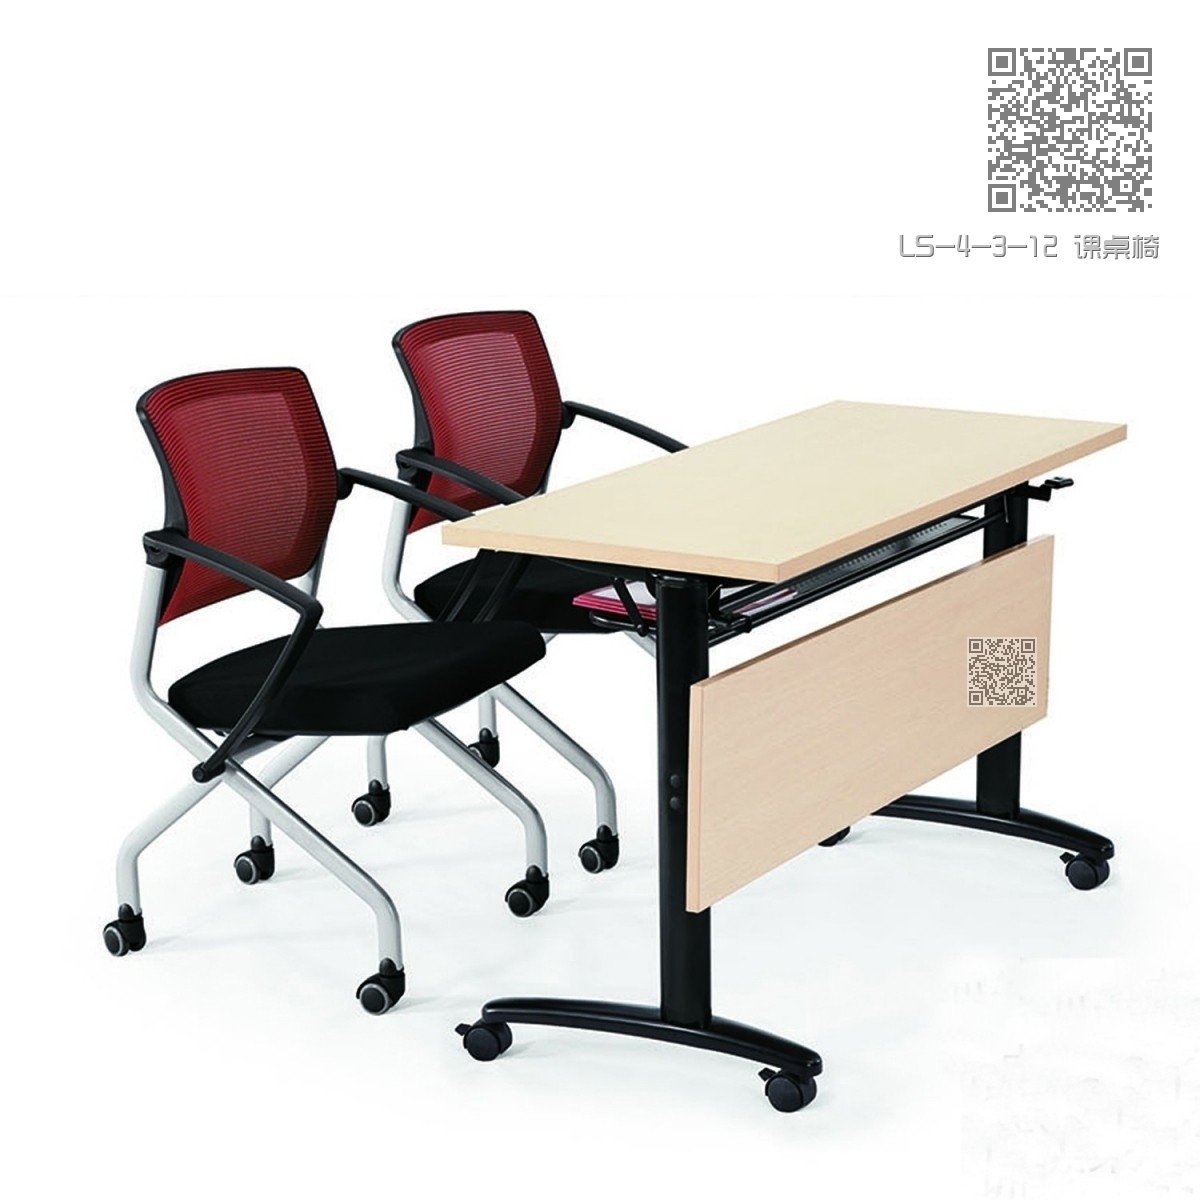 LS-4-3-12 课桌椅